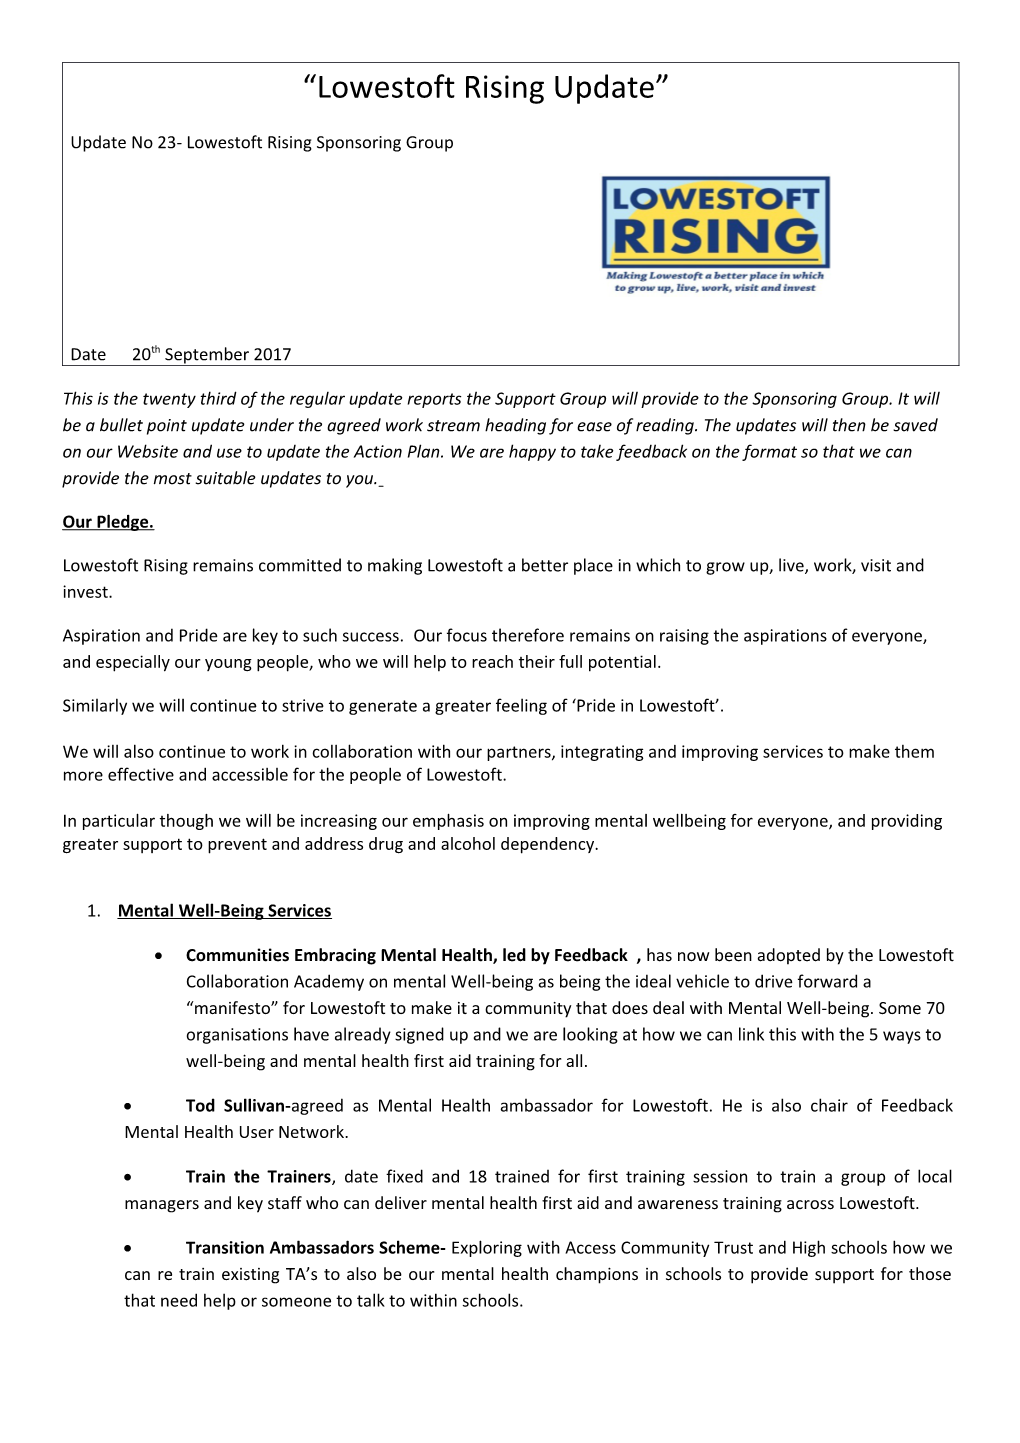 Update No 23- Lowestoft Rising Sponsoring Group